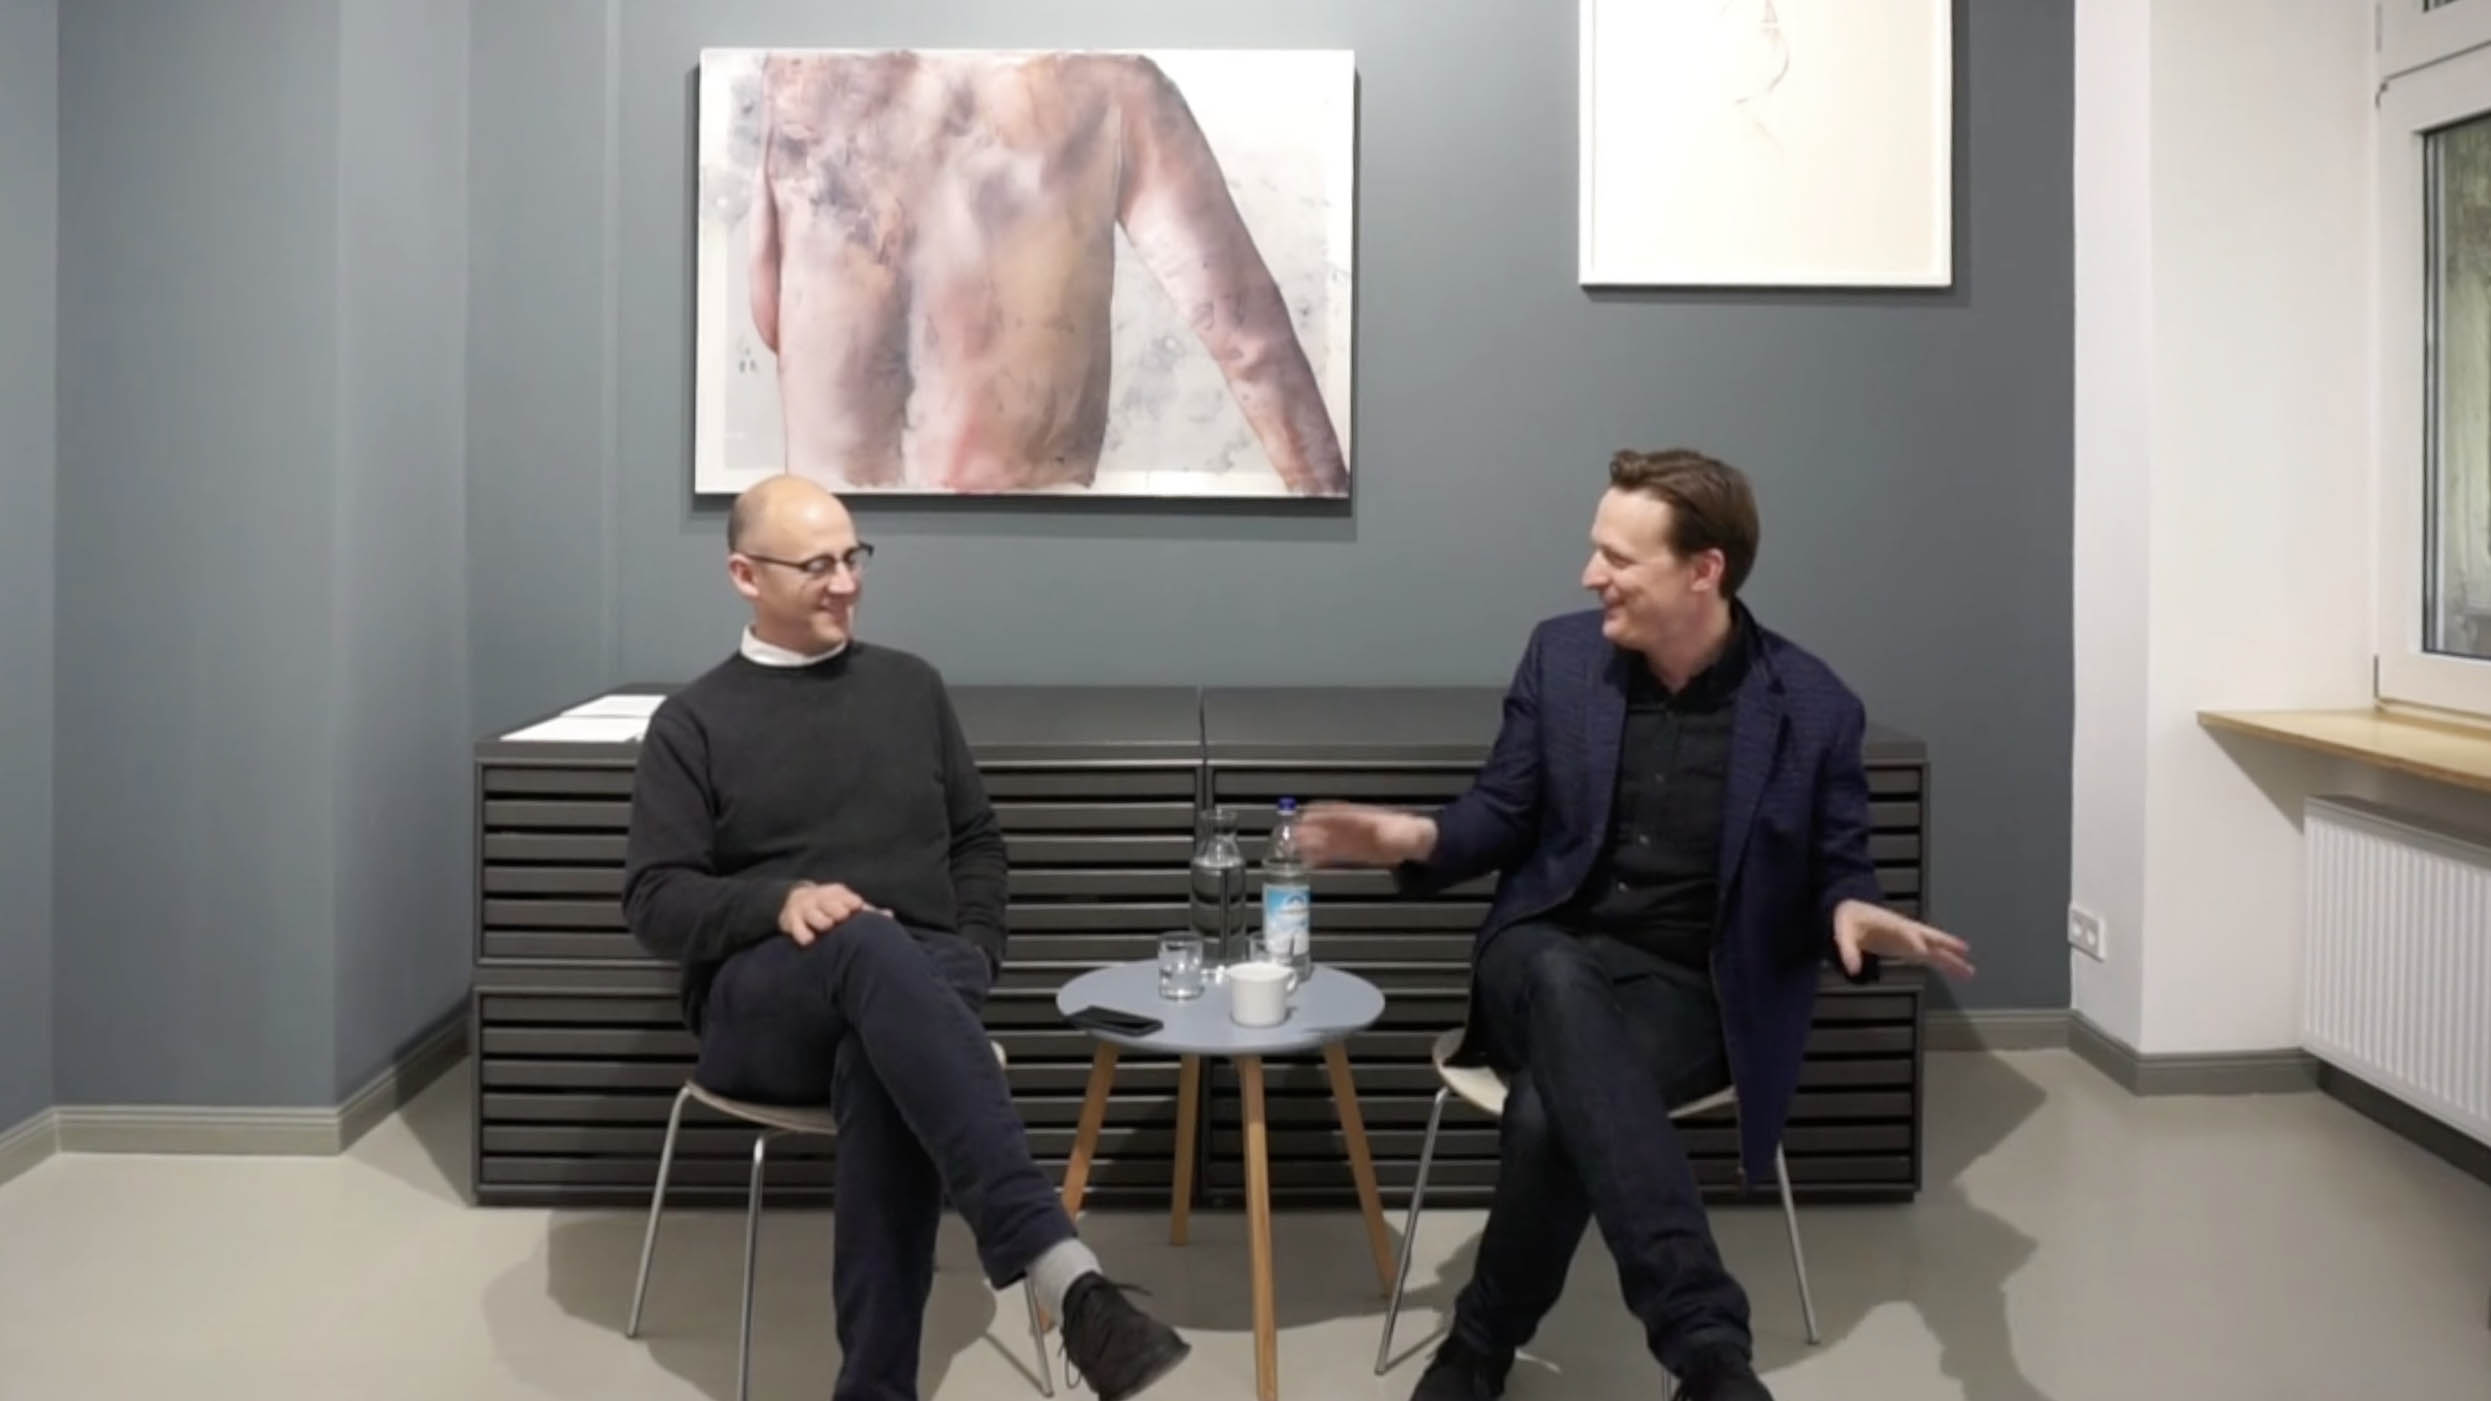 In conversation: Matt Saunders and curator Jacob Proctor